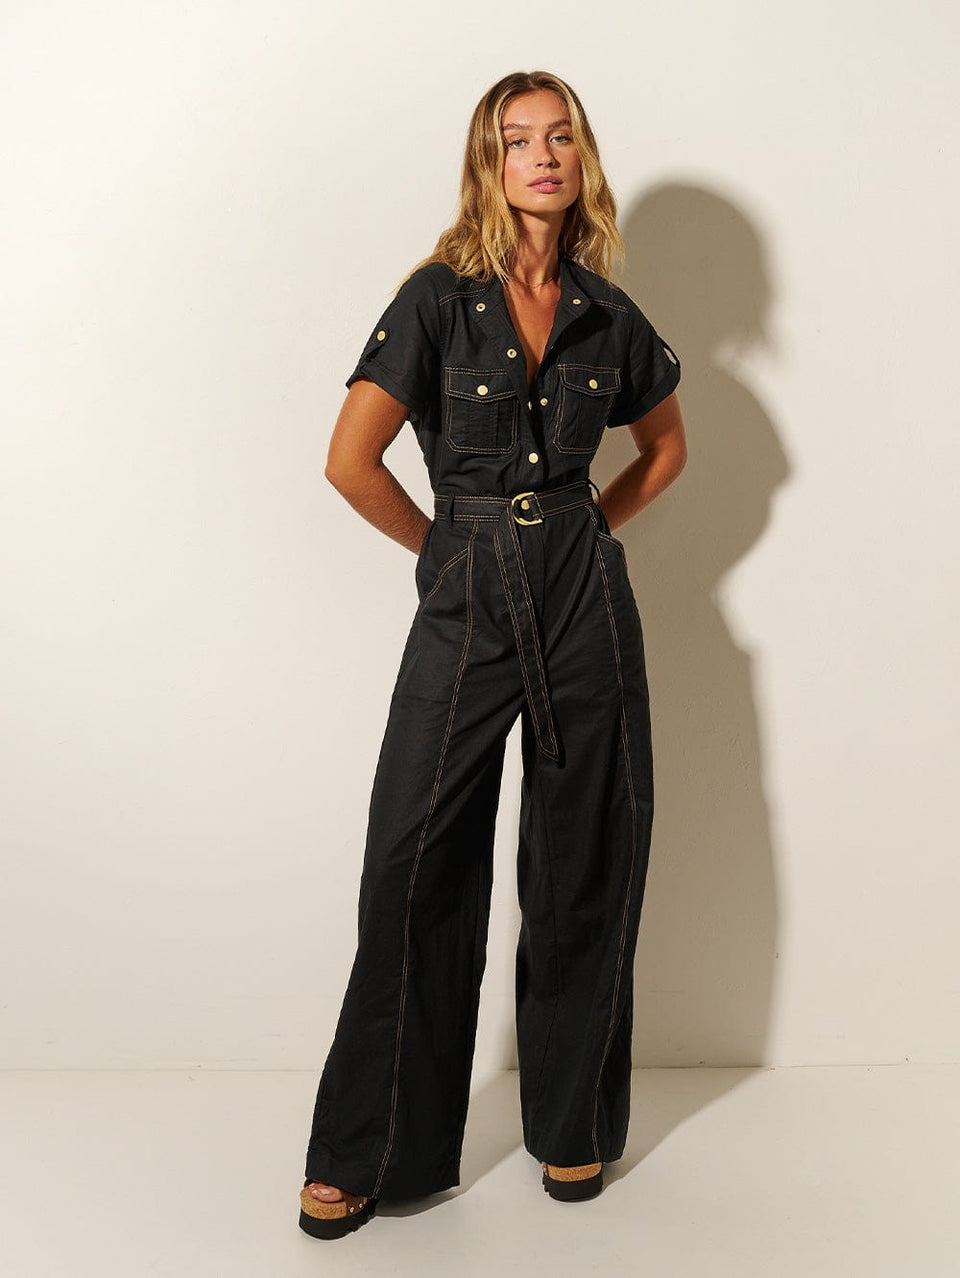 Studio model wears KIVARI Ebony Jumpsuit: a black linen jumpsuit with gold buttons, topstitch details, a button-front with signature hardware and belt.